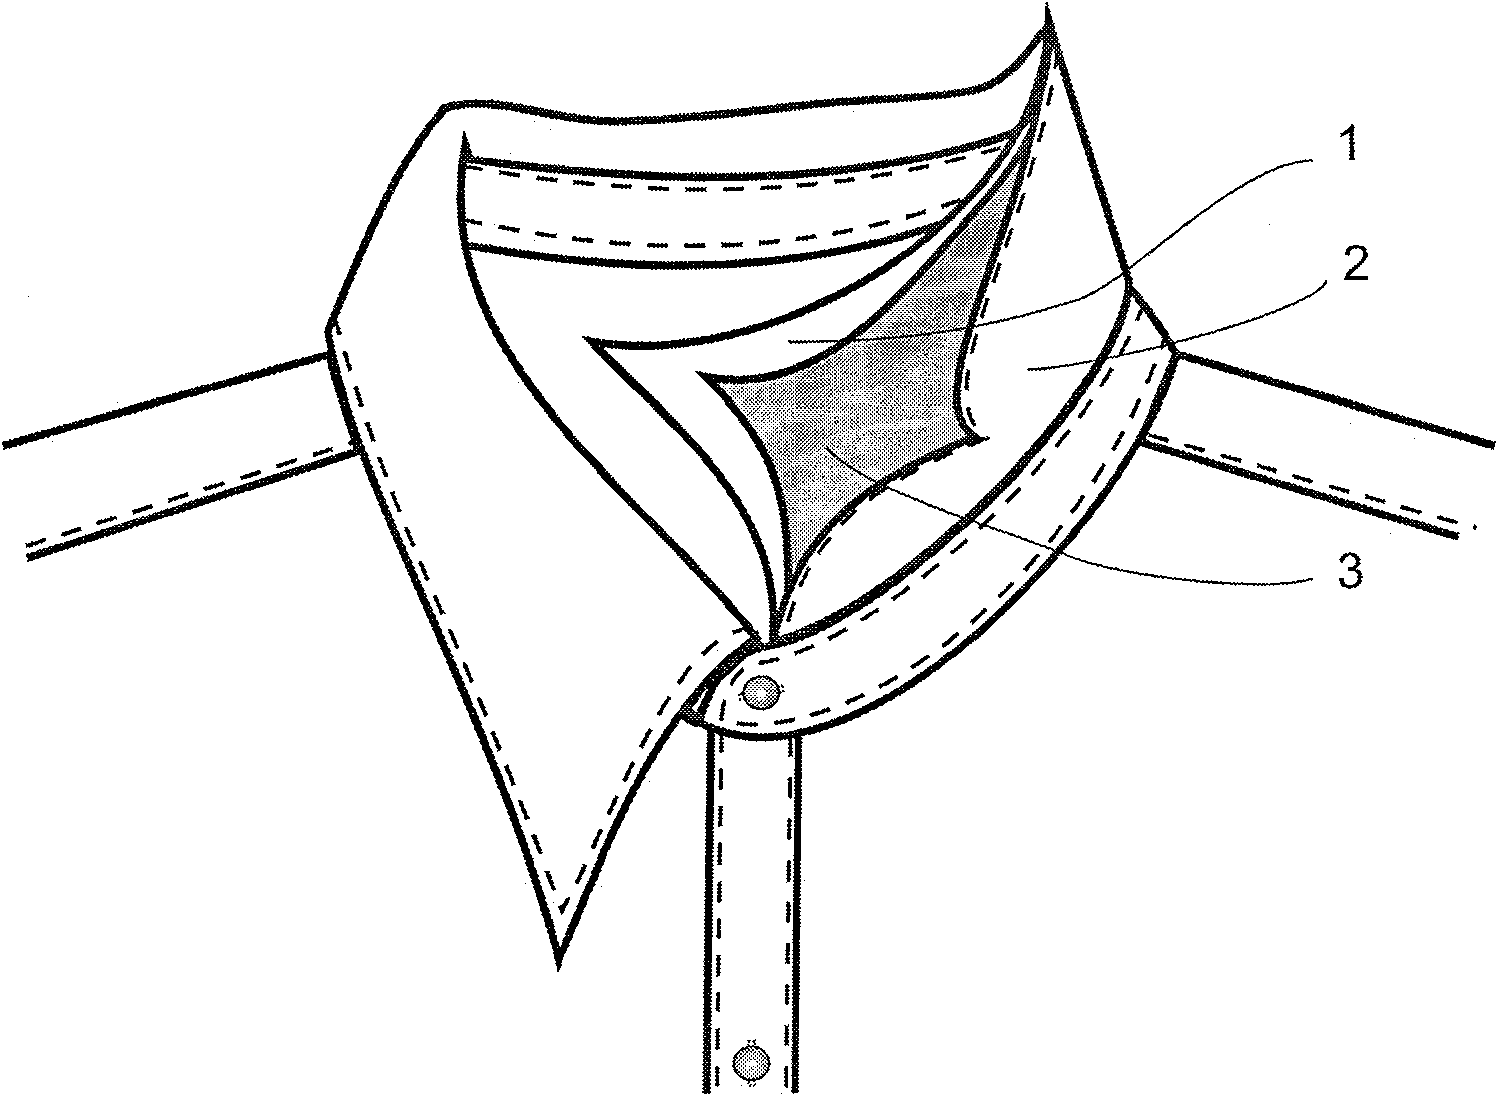 Manufacturing method of anti-curl collar